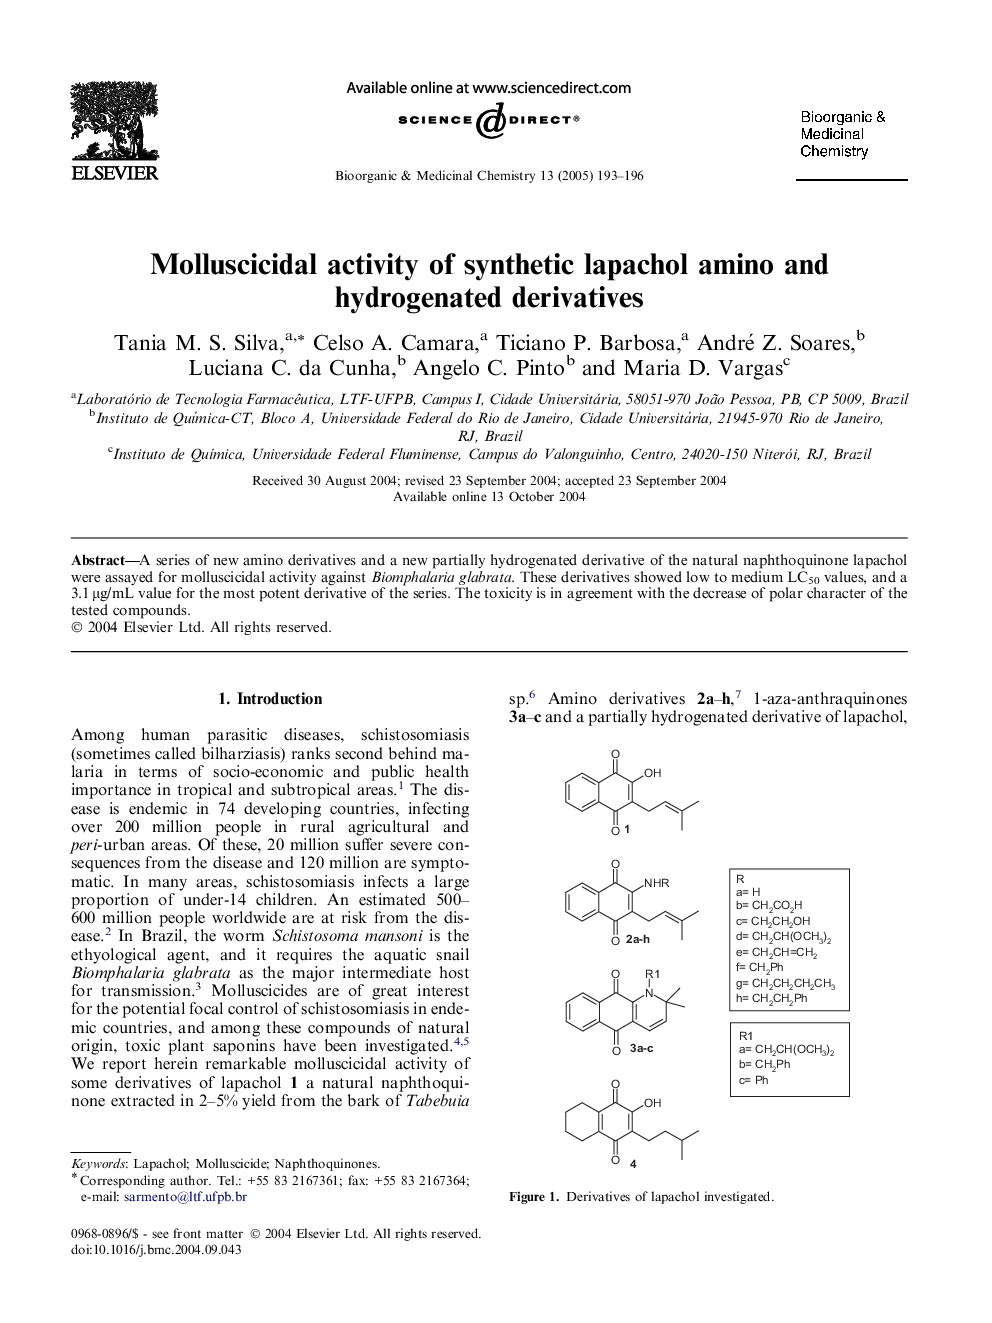 Molluscicidal activity of synthetic lapachol amino and hydrogenated derivatives